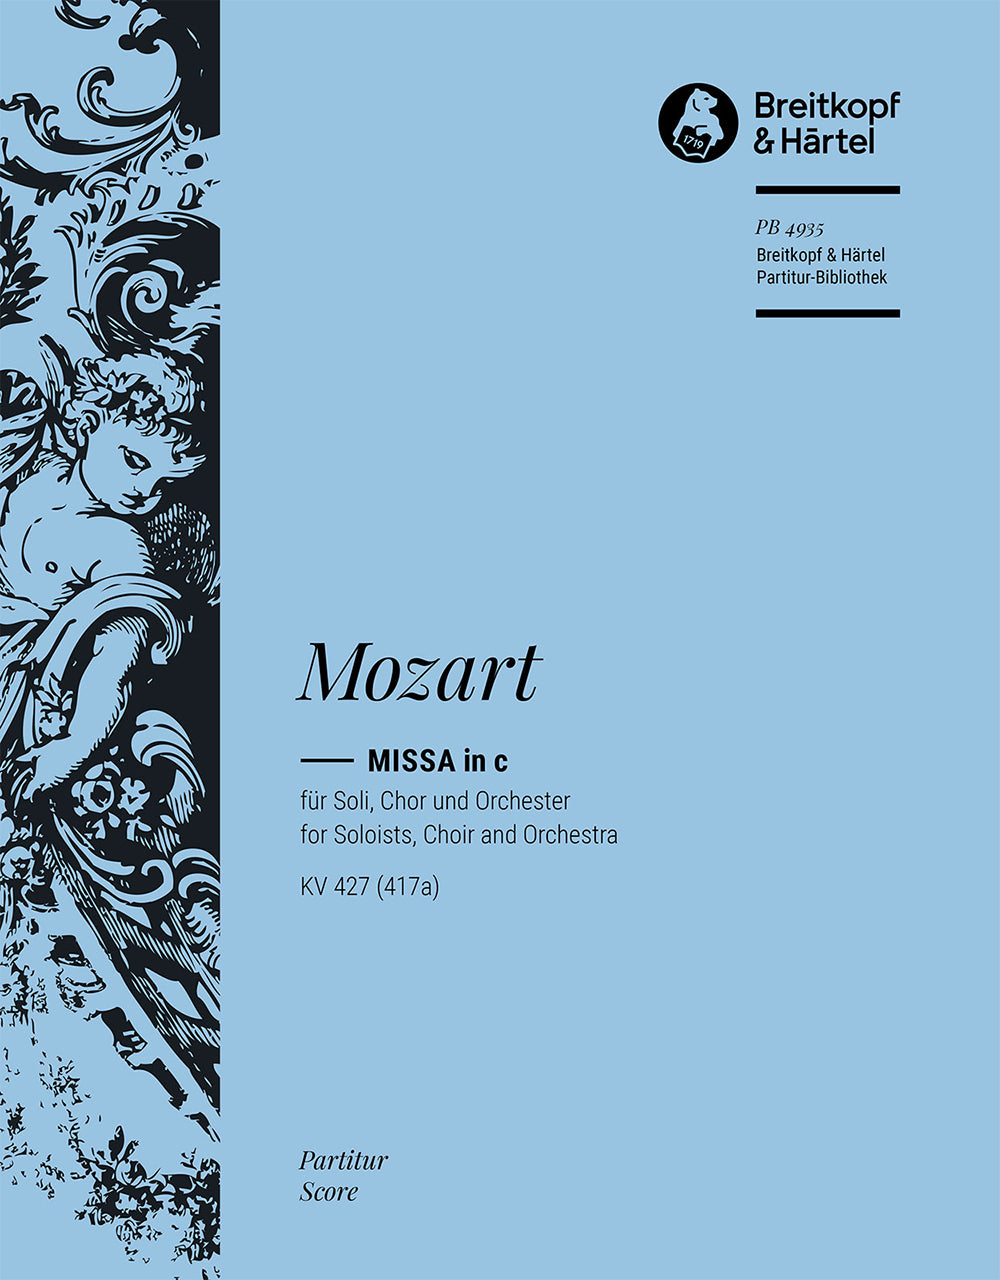 Mozart Mass in c minor, K. 427 (417a)